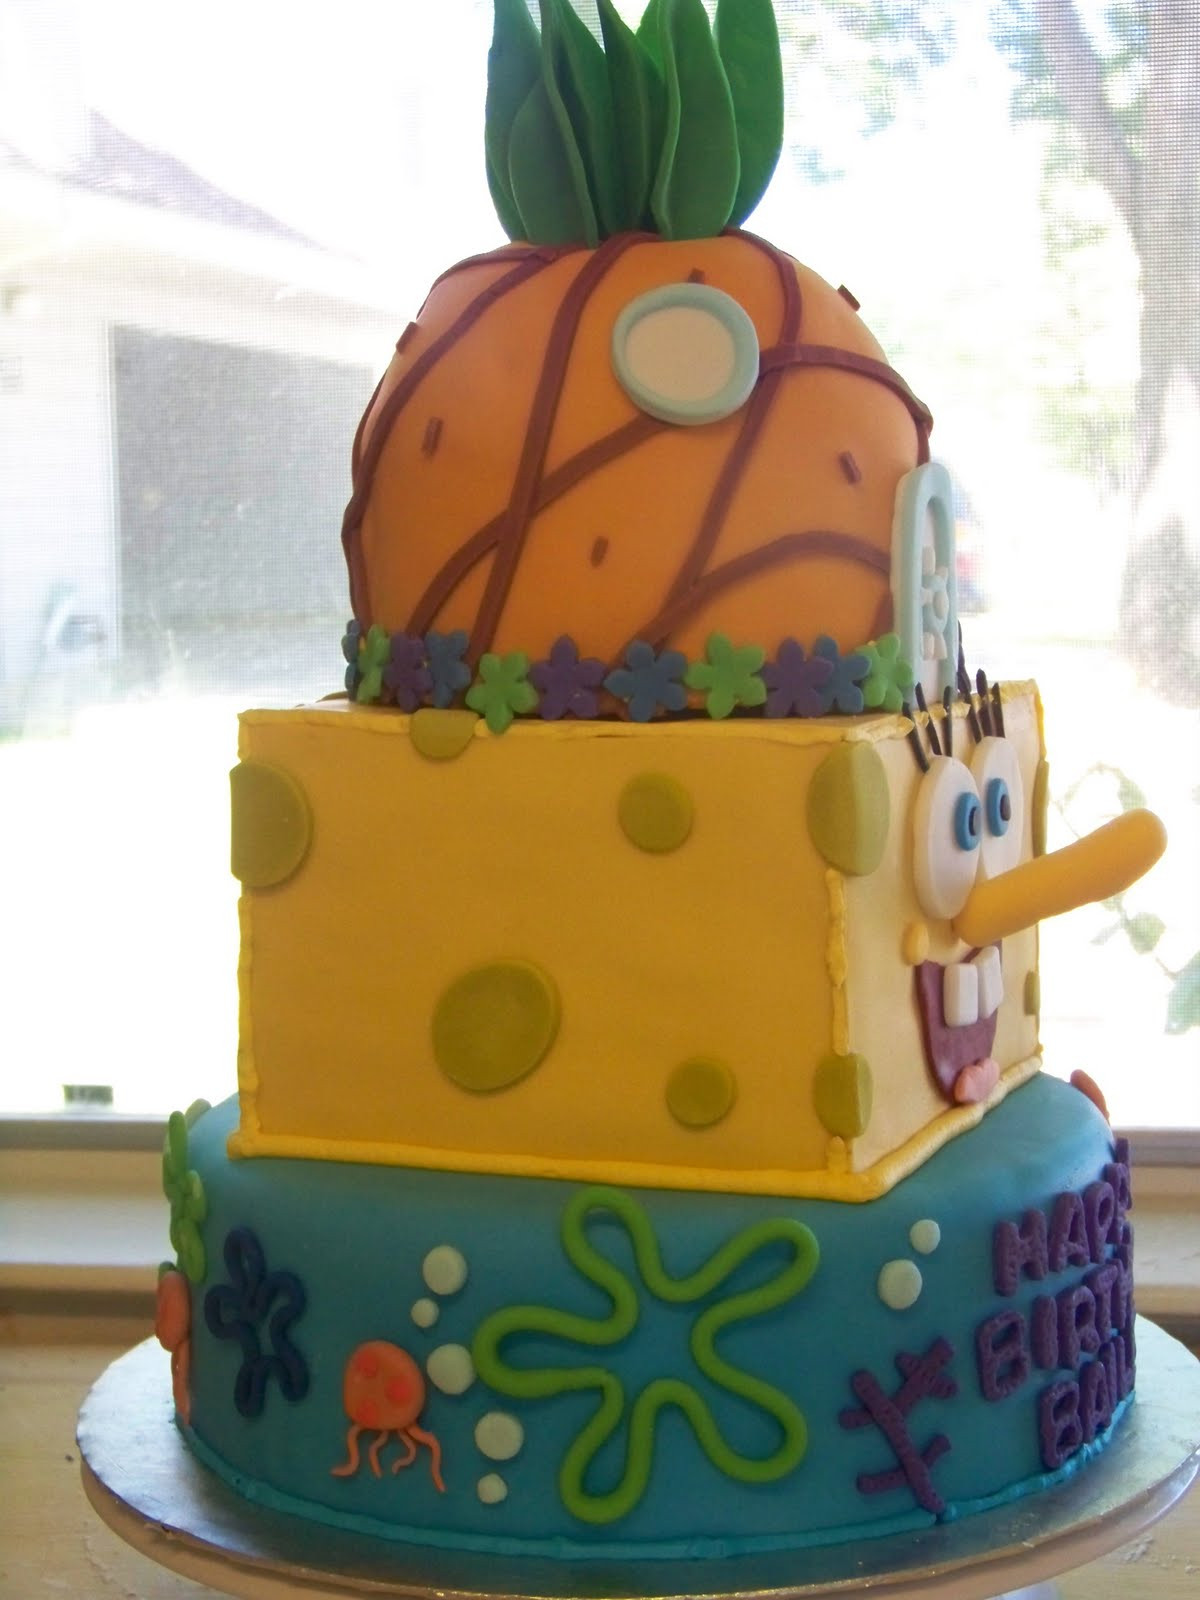 Spongebob Birthday Cakes
 BB Cakes Spongebob Squarepants Cake